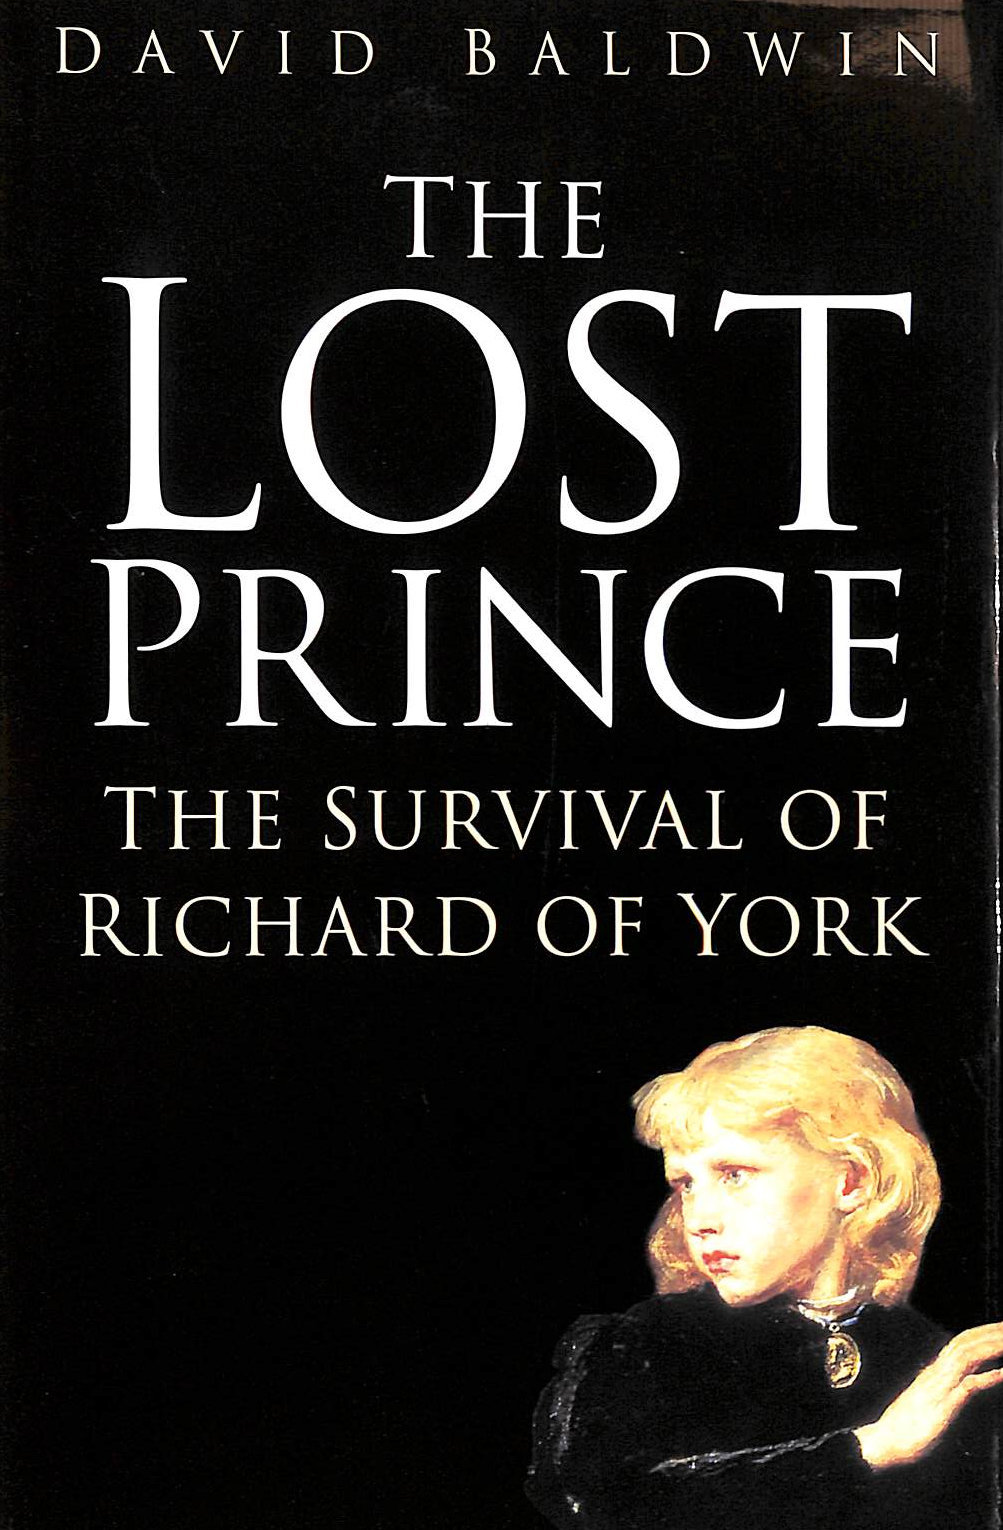 DAVID BALDWIN - The Lost Prince: The Survival of Richard of York